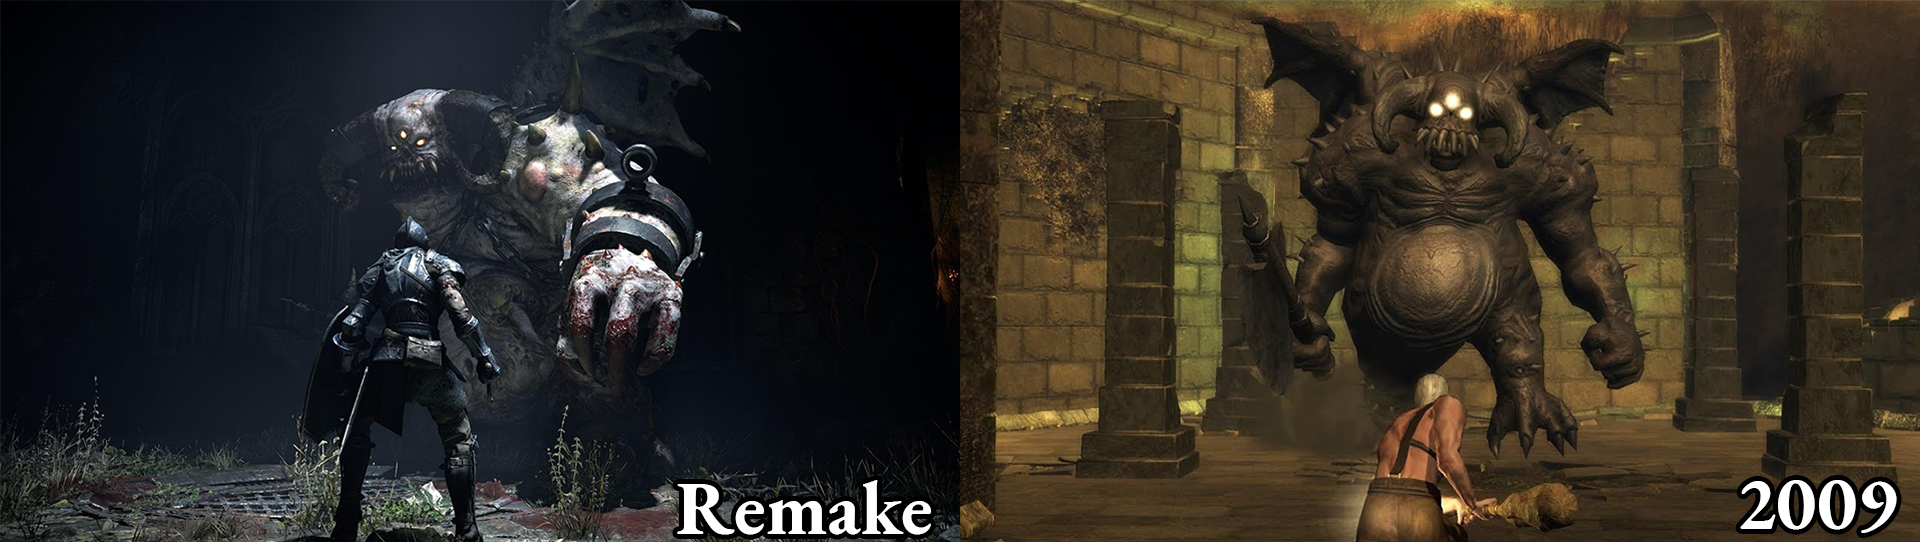 Demon's Souls Remake vs Original Early Grpahics Comparison - video